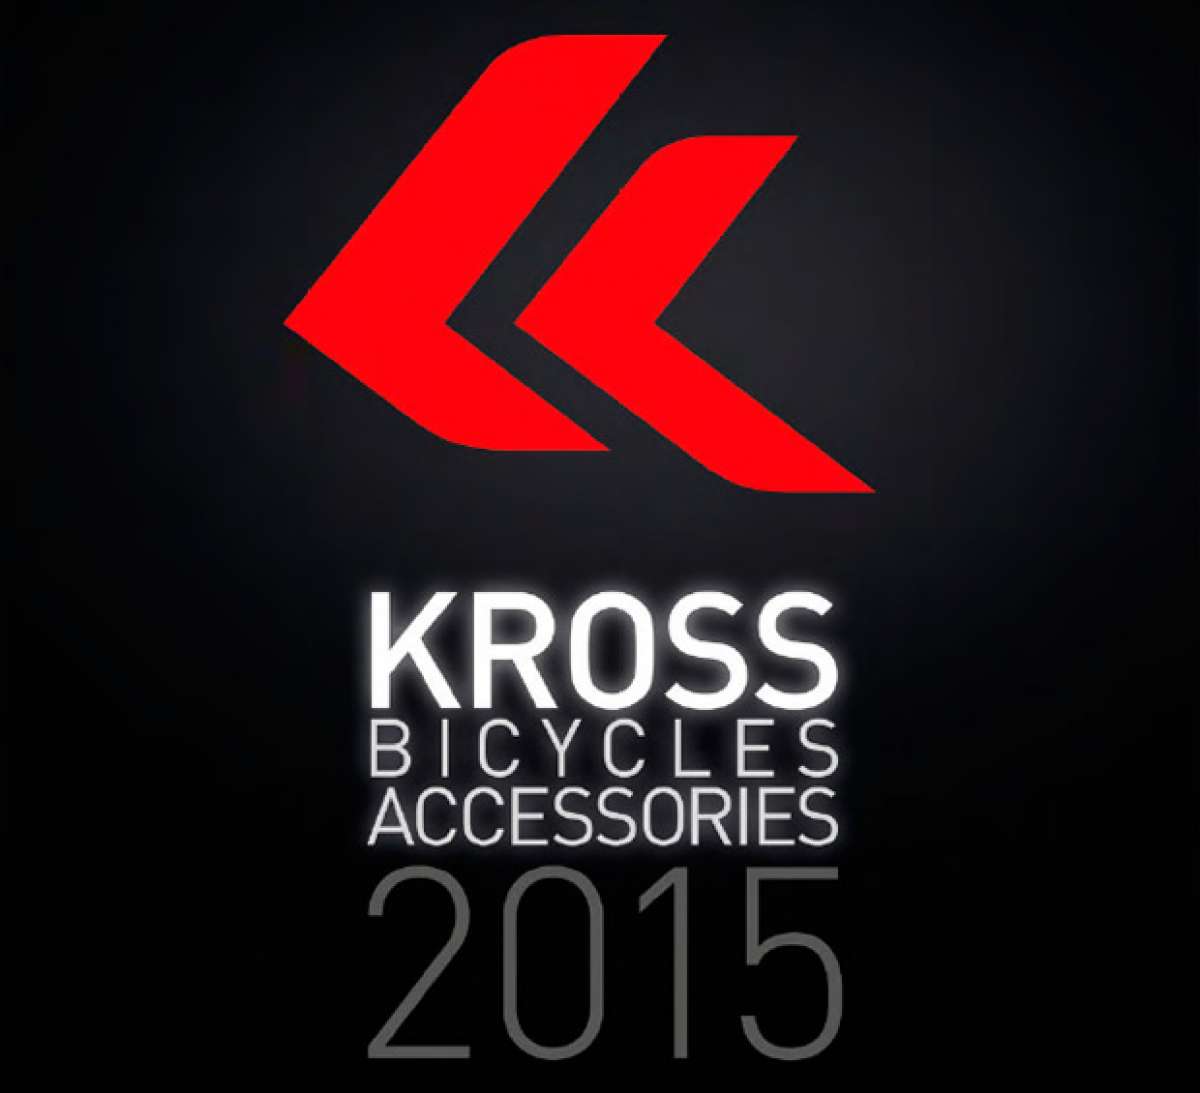 Catálogo de Kross 2015. Toda la gama de bicicletas Kross para la temporada 2015